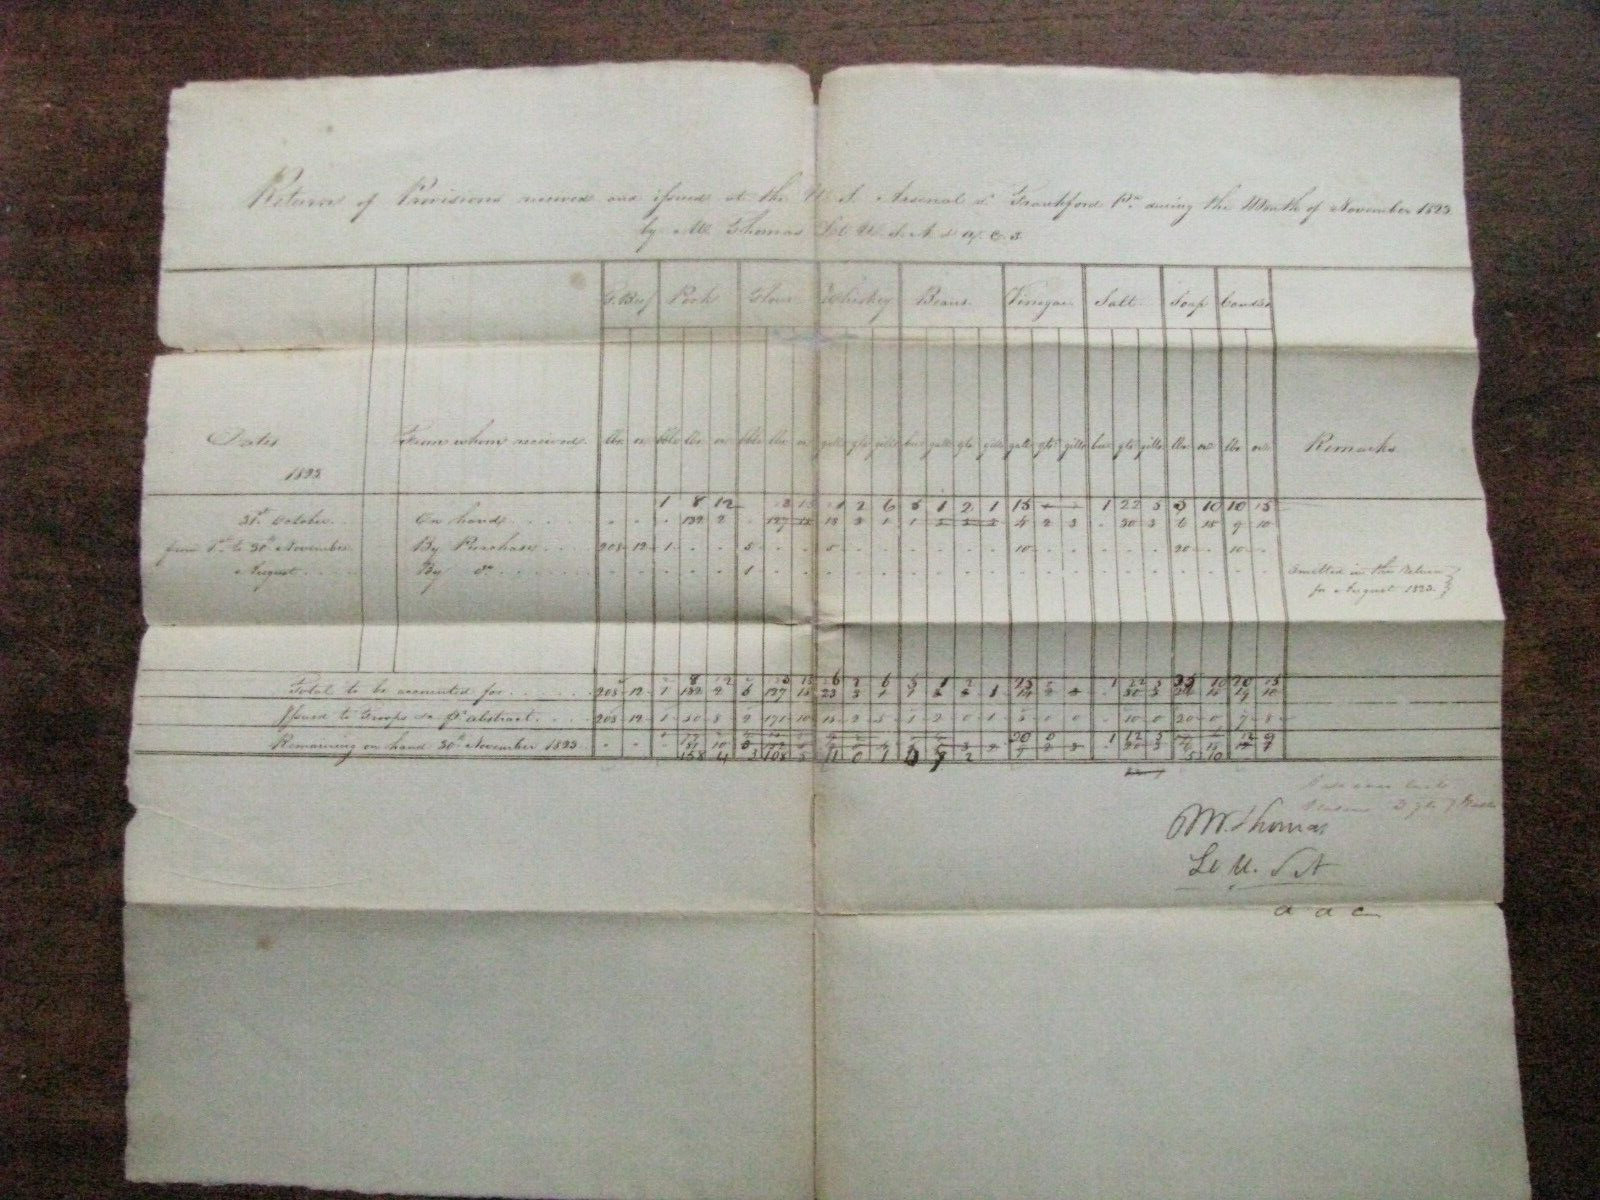 FRANKFORD ARSENAL PENNSYLVANIA 1823 PROVISIONS REPORT